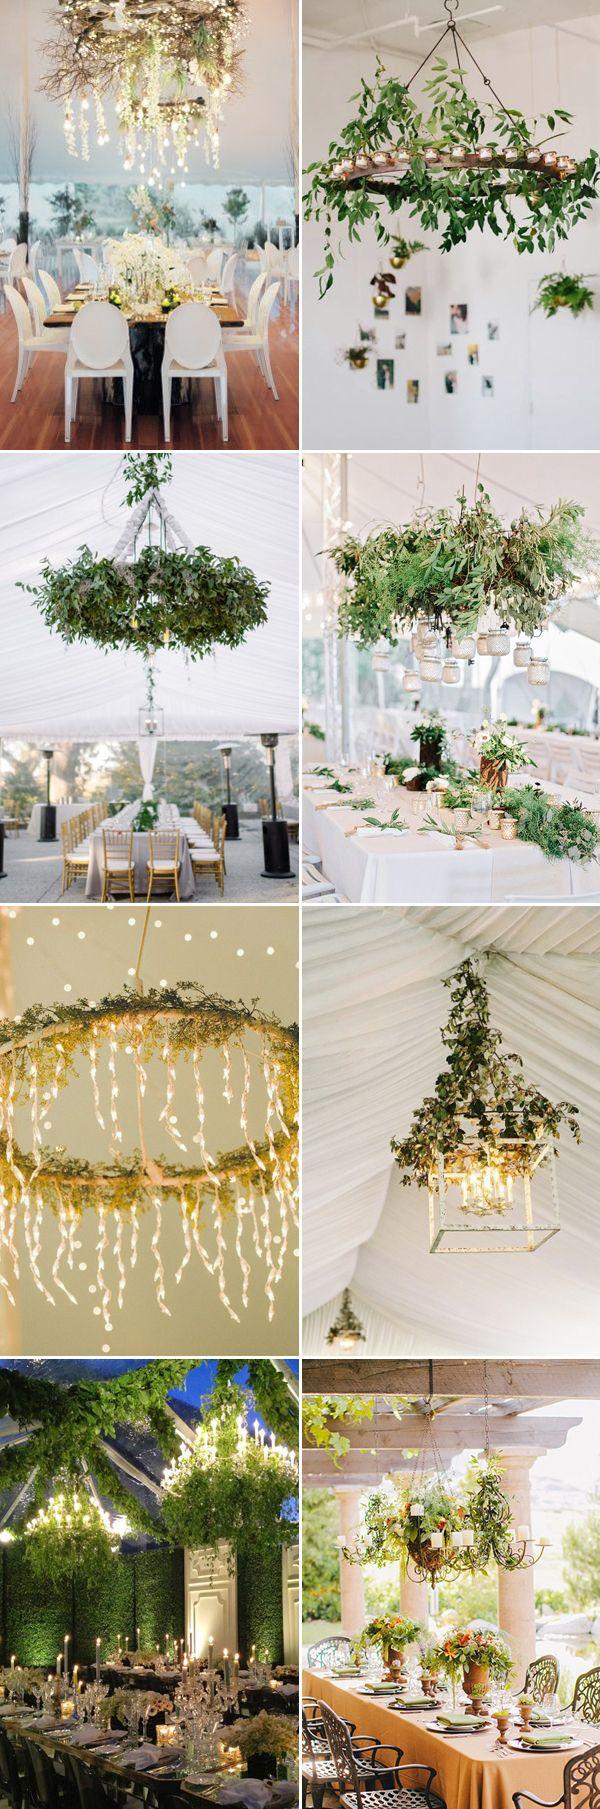 Wedding - Fairytale Lighting! 25 Romantic Wedding Chandelier Ideas